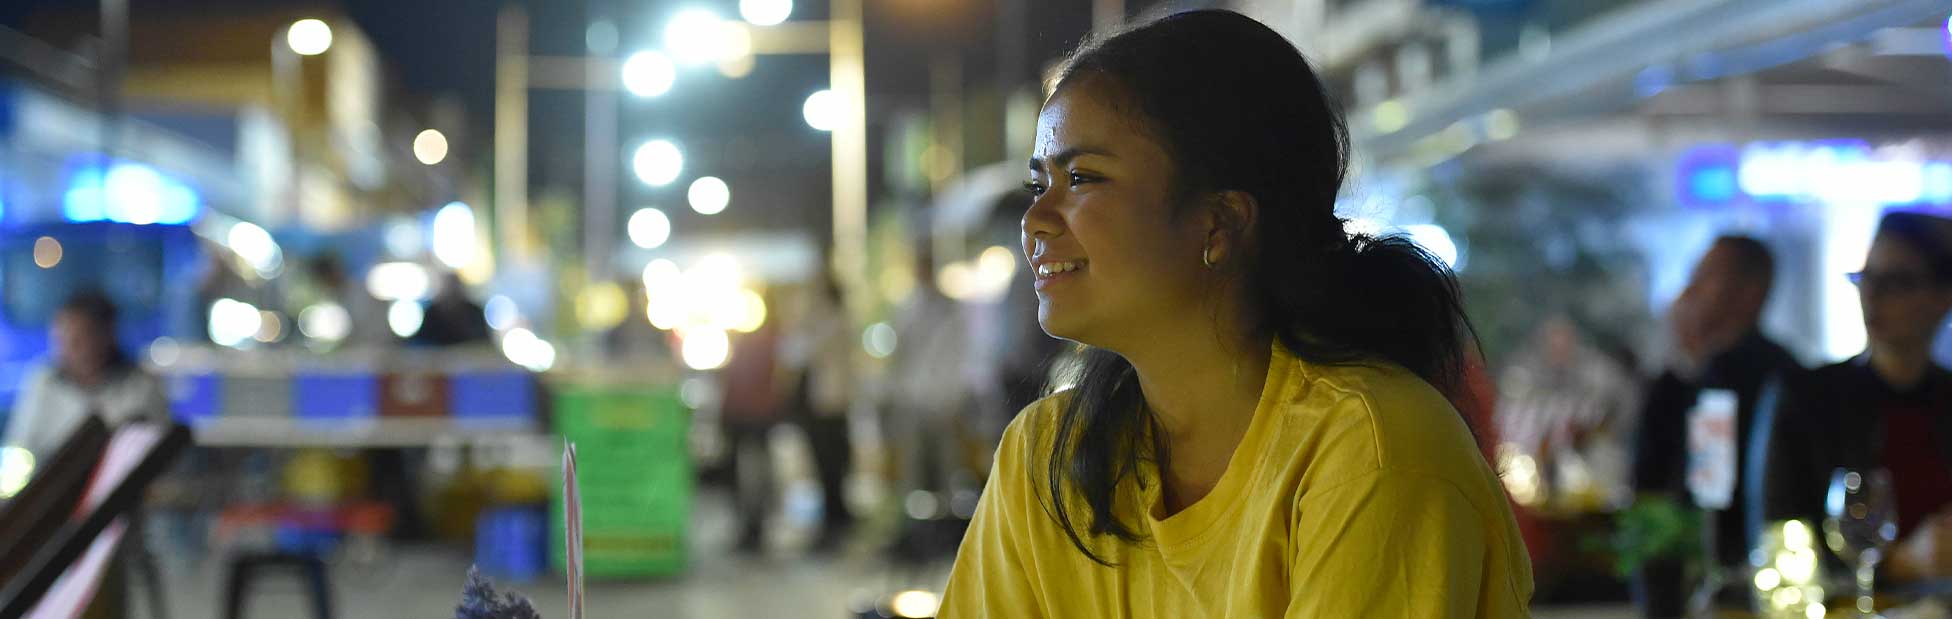 Woman on lit street smiling